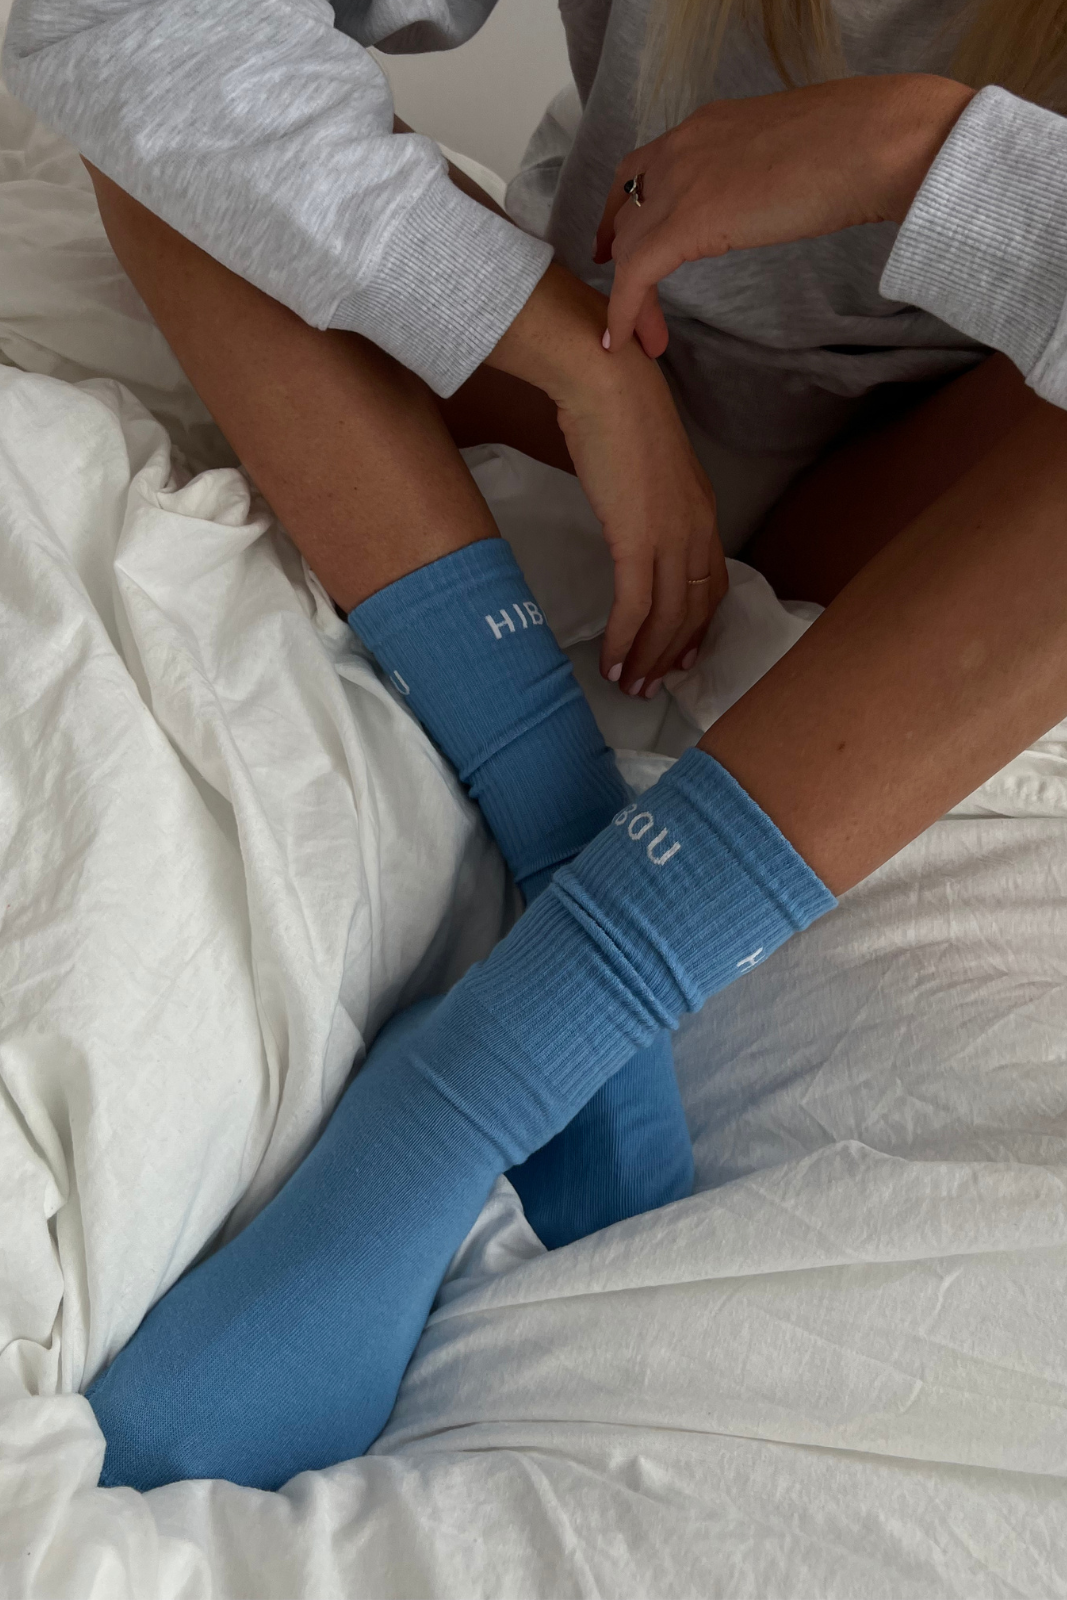 Blue Hibou Socks